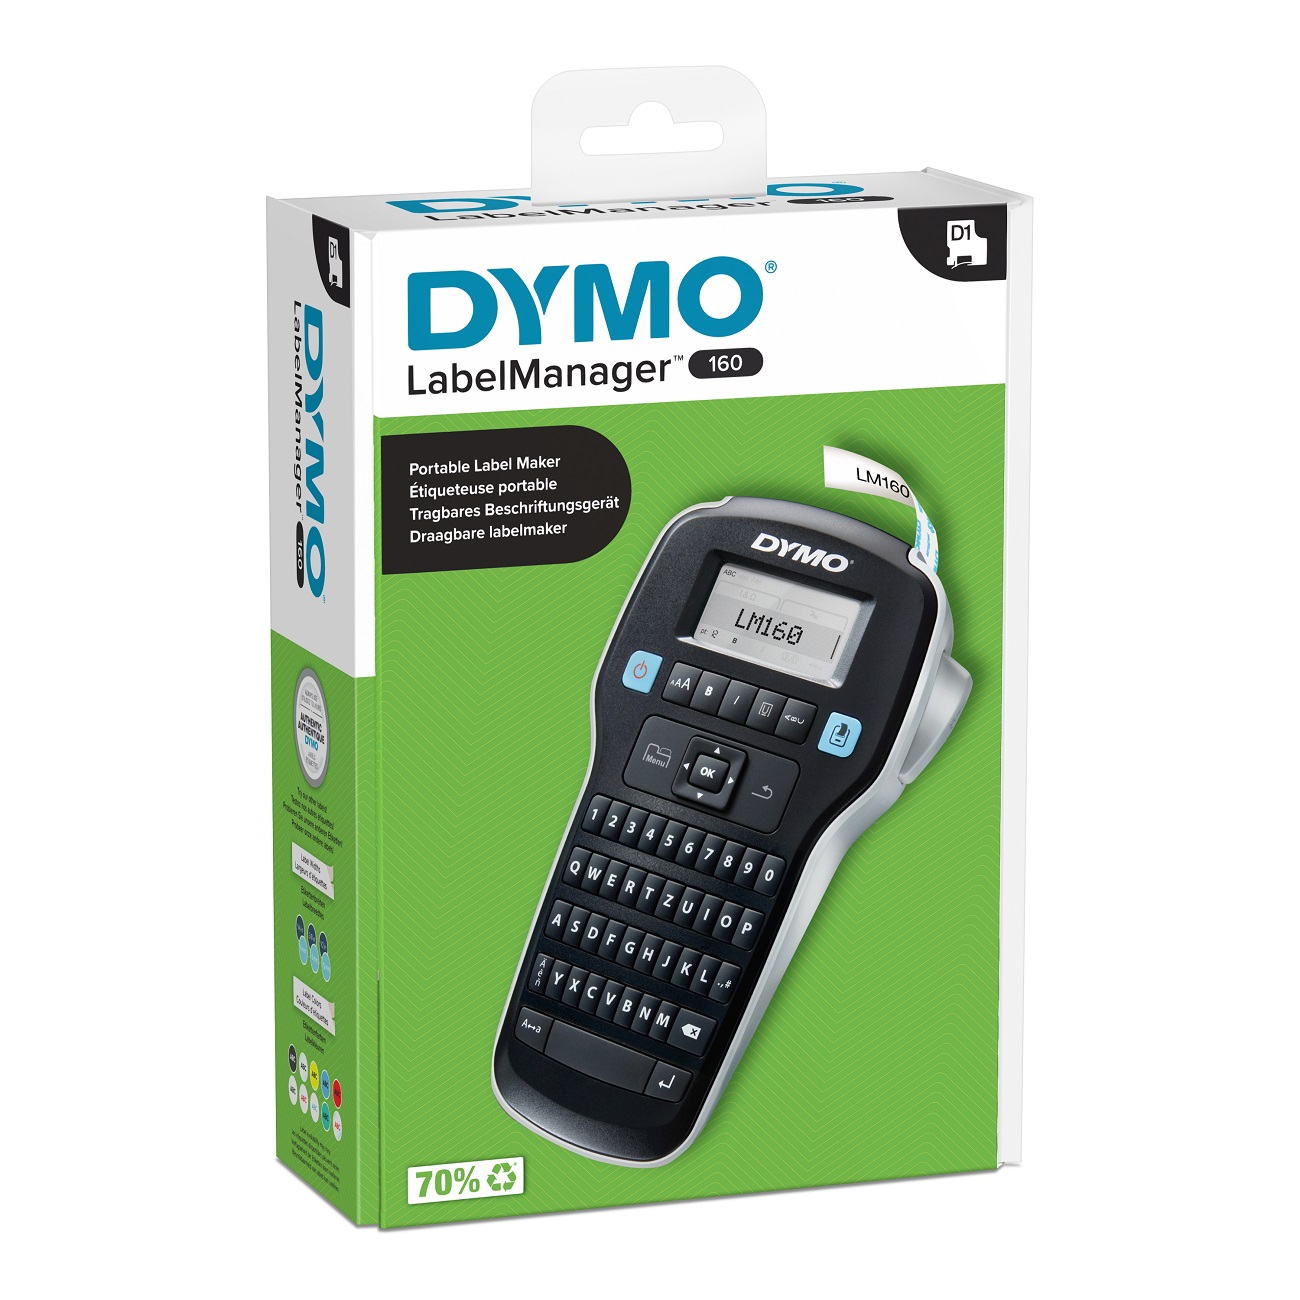 DYMO LabelManager 160 6/9/12 mm D1-Bänder Qwertz - 2174611